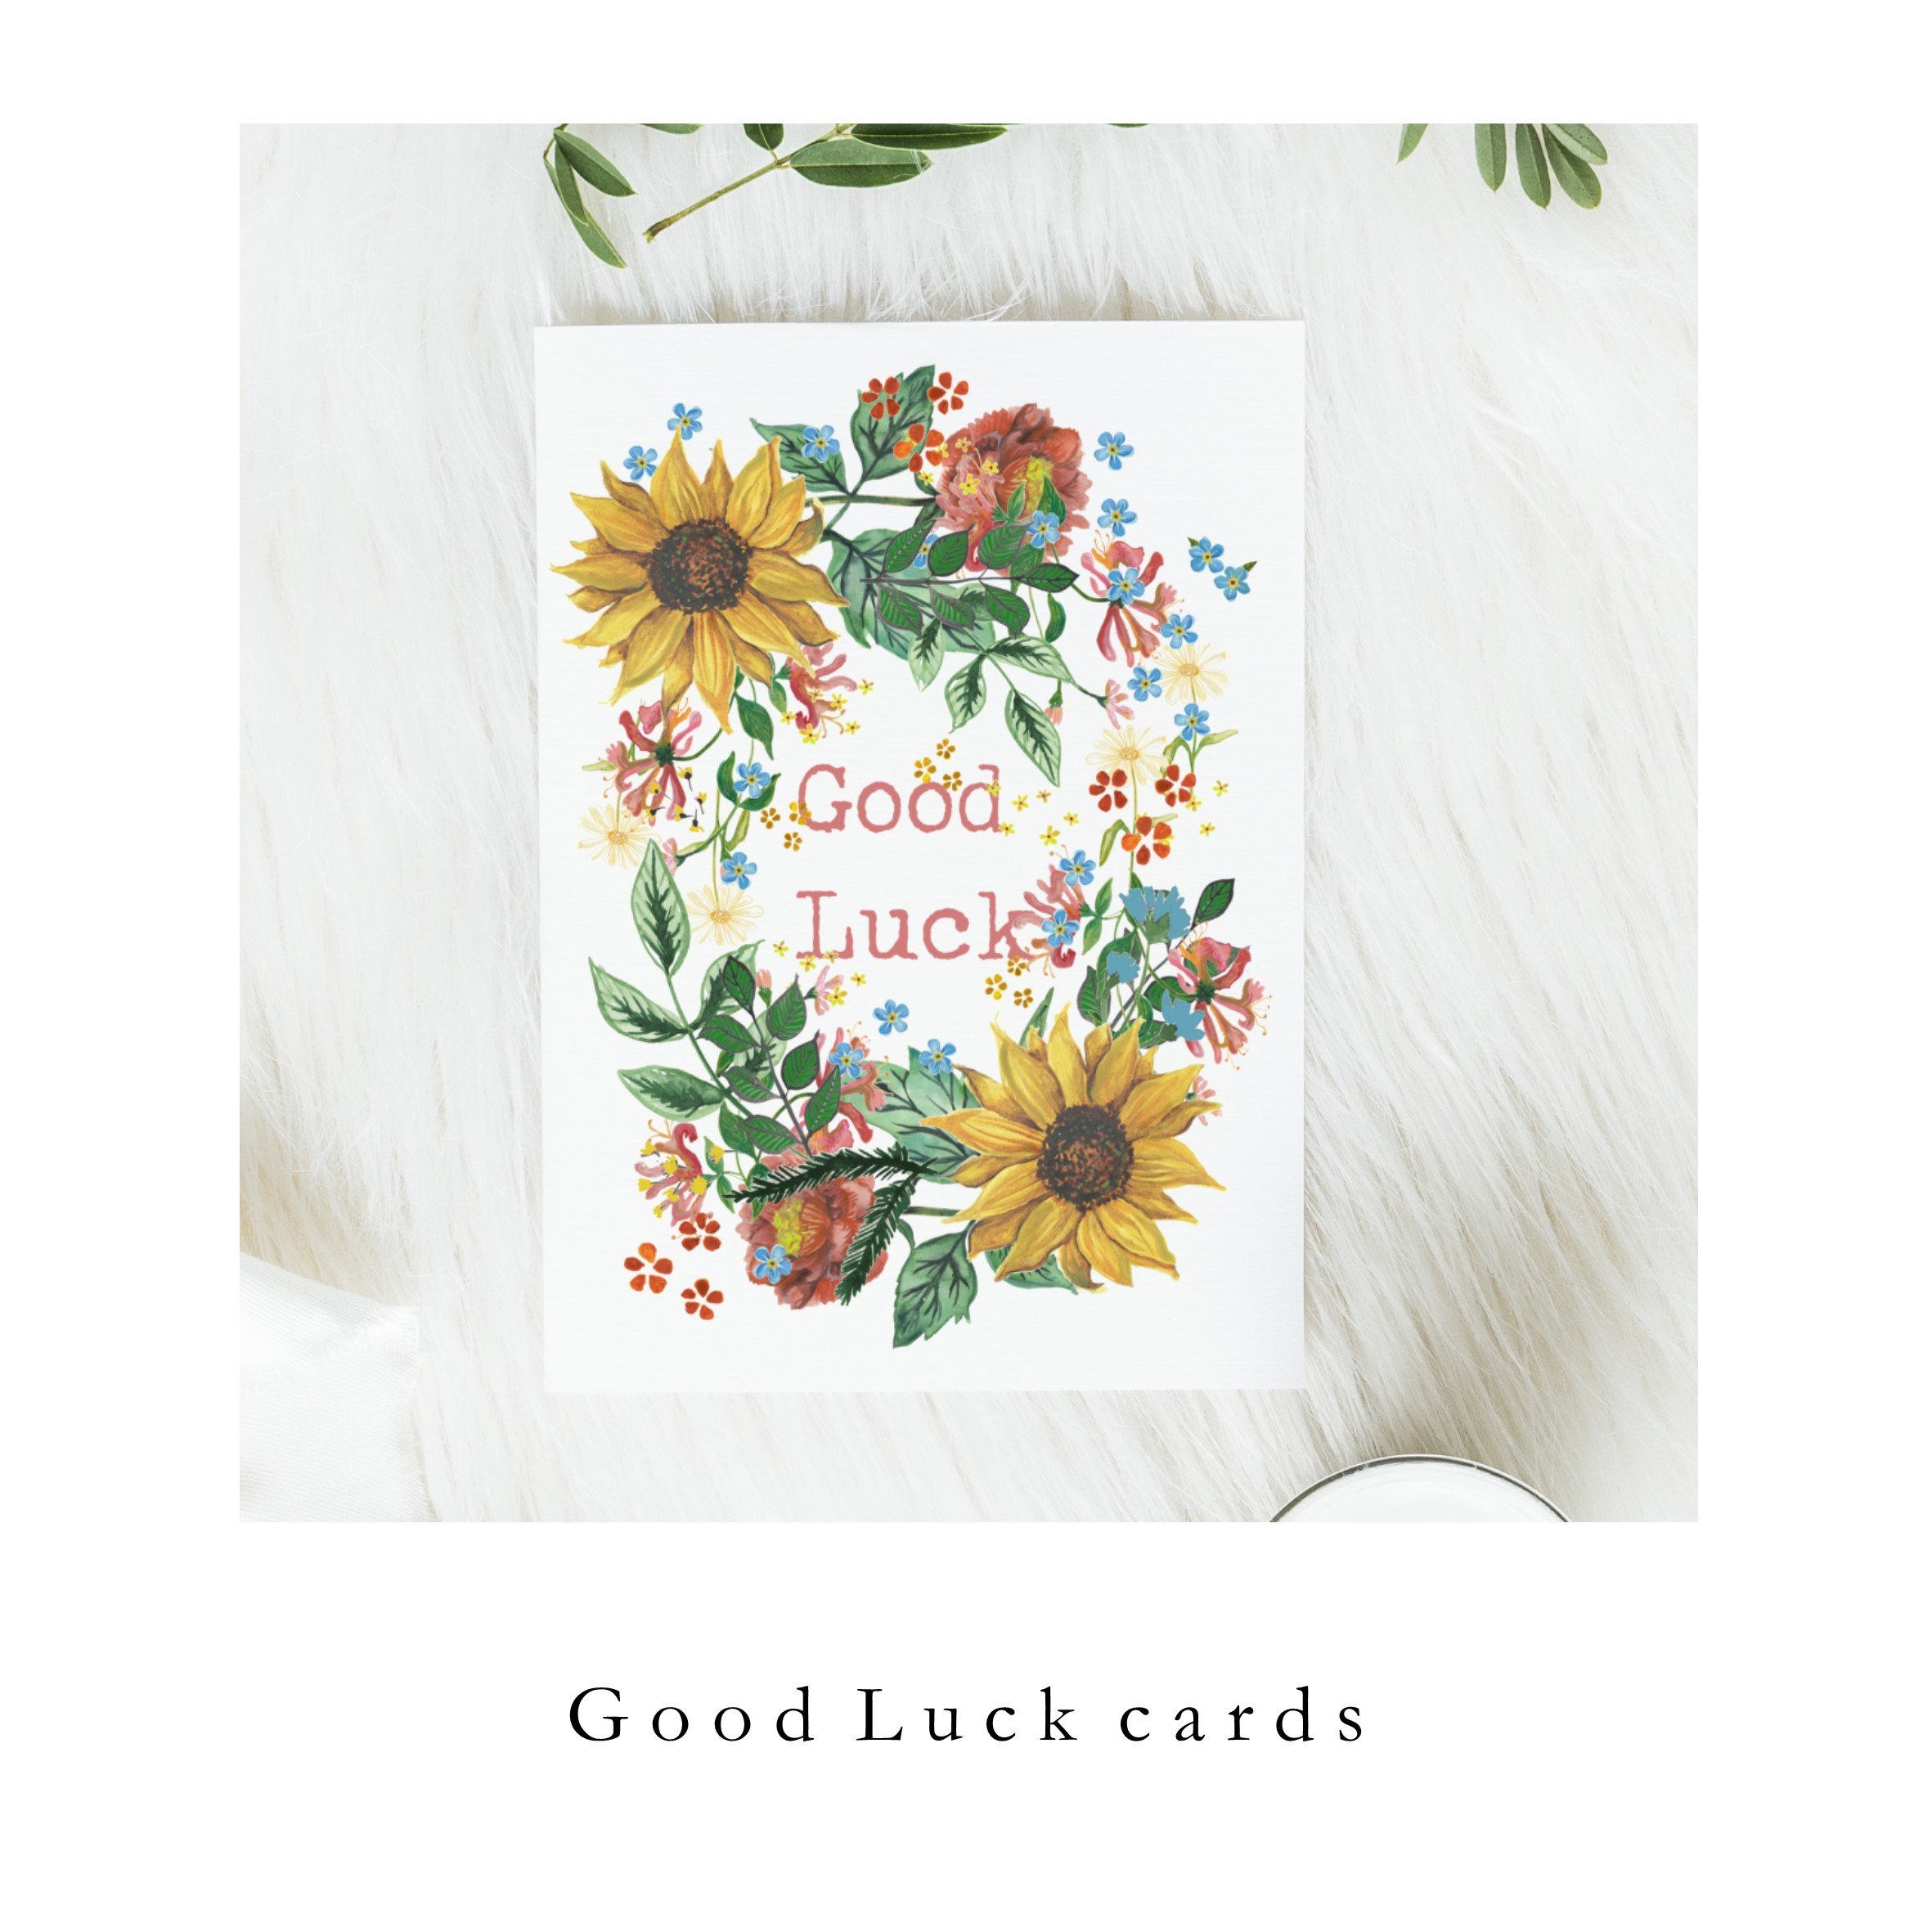 Good Luck cards.jpg